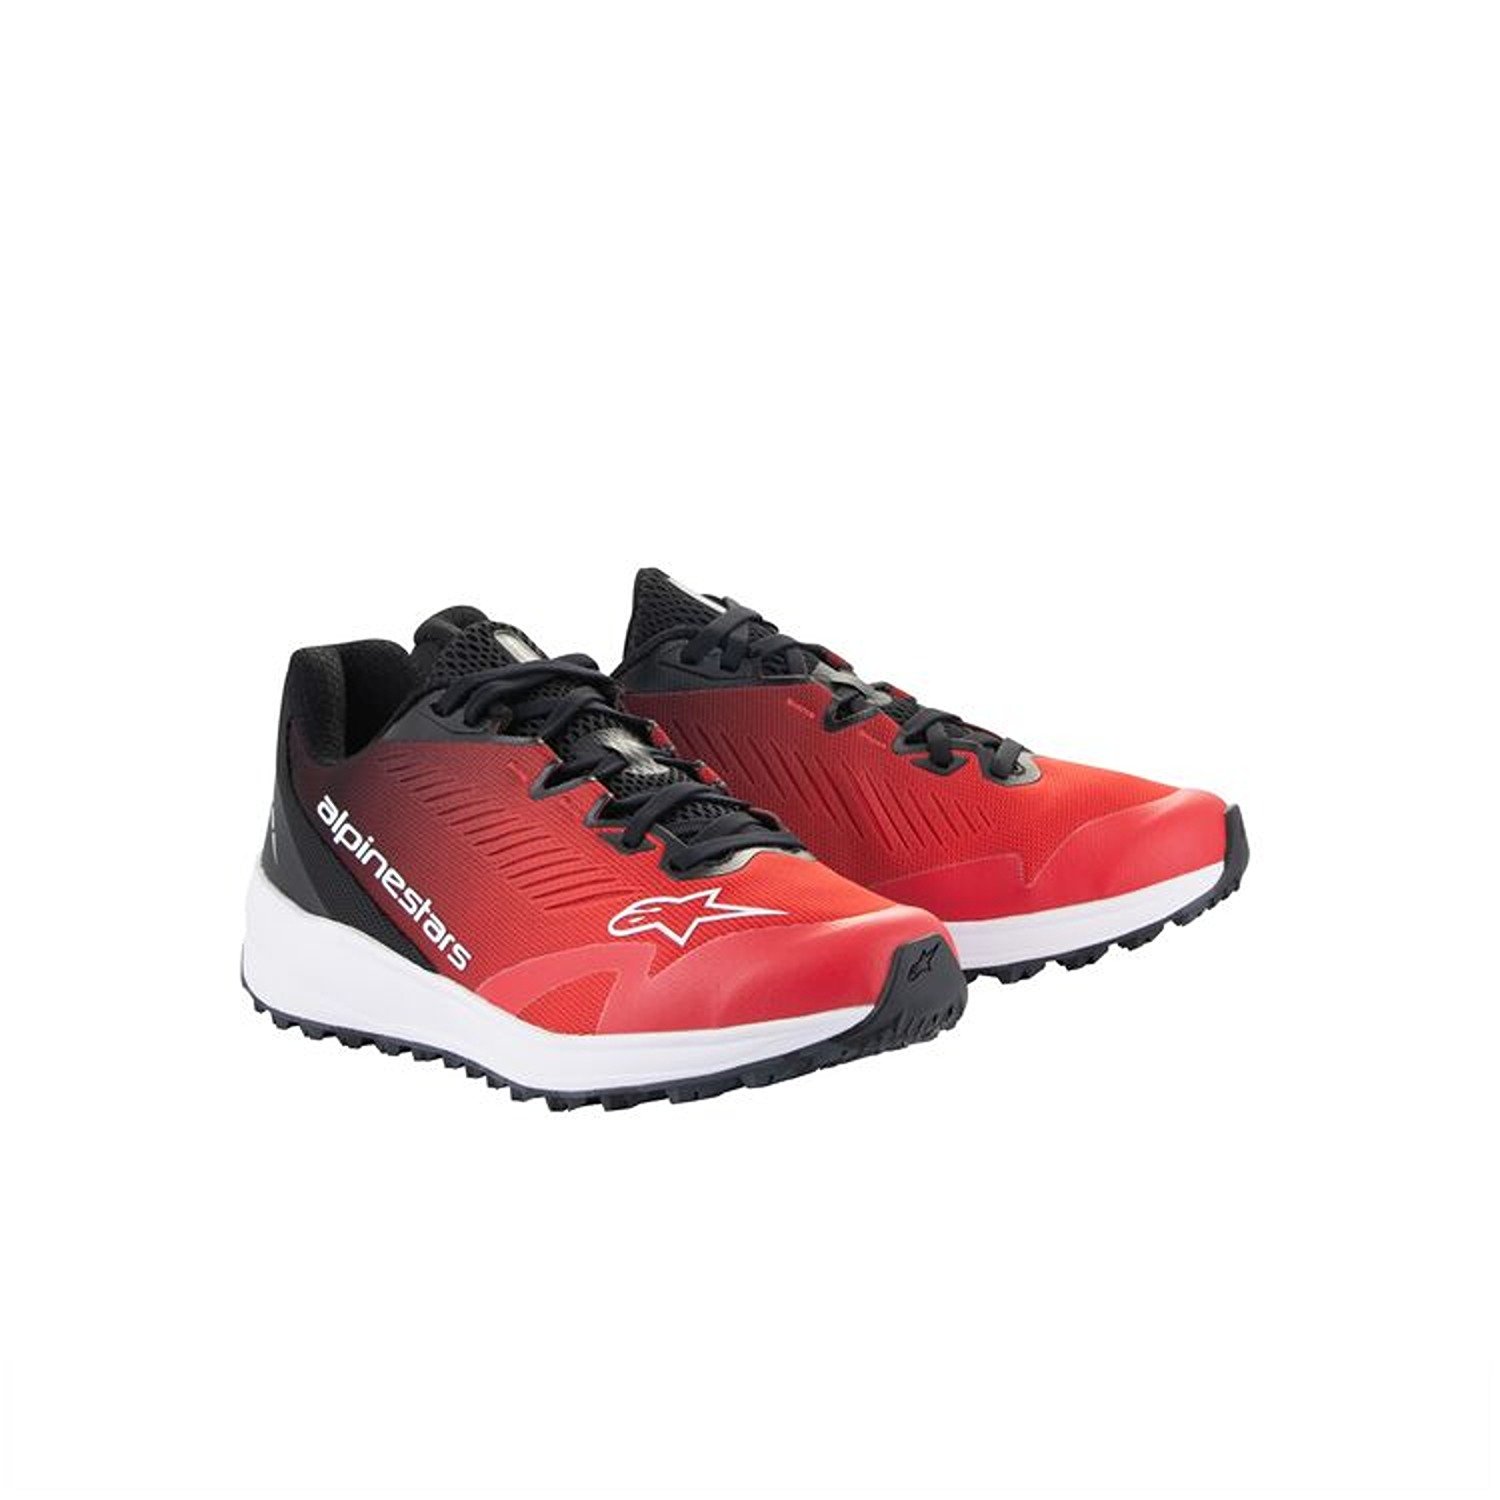 Image of Alpinestars Meta Road V2 Shoes Red Black White Size US 85 EN